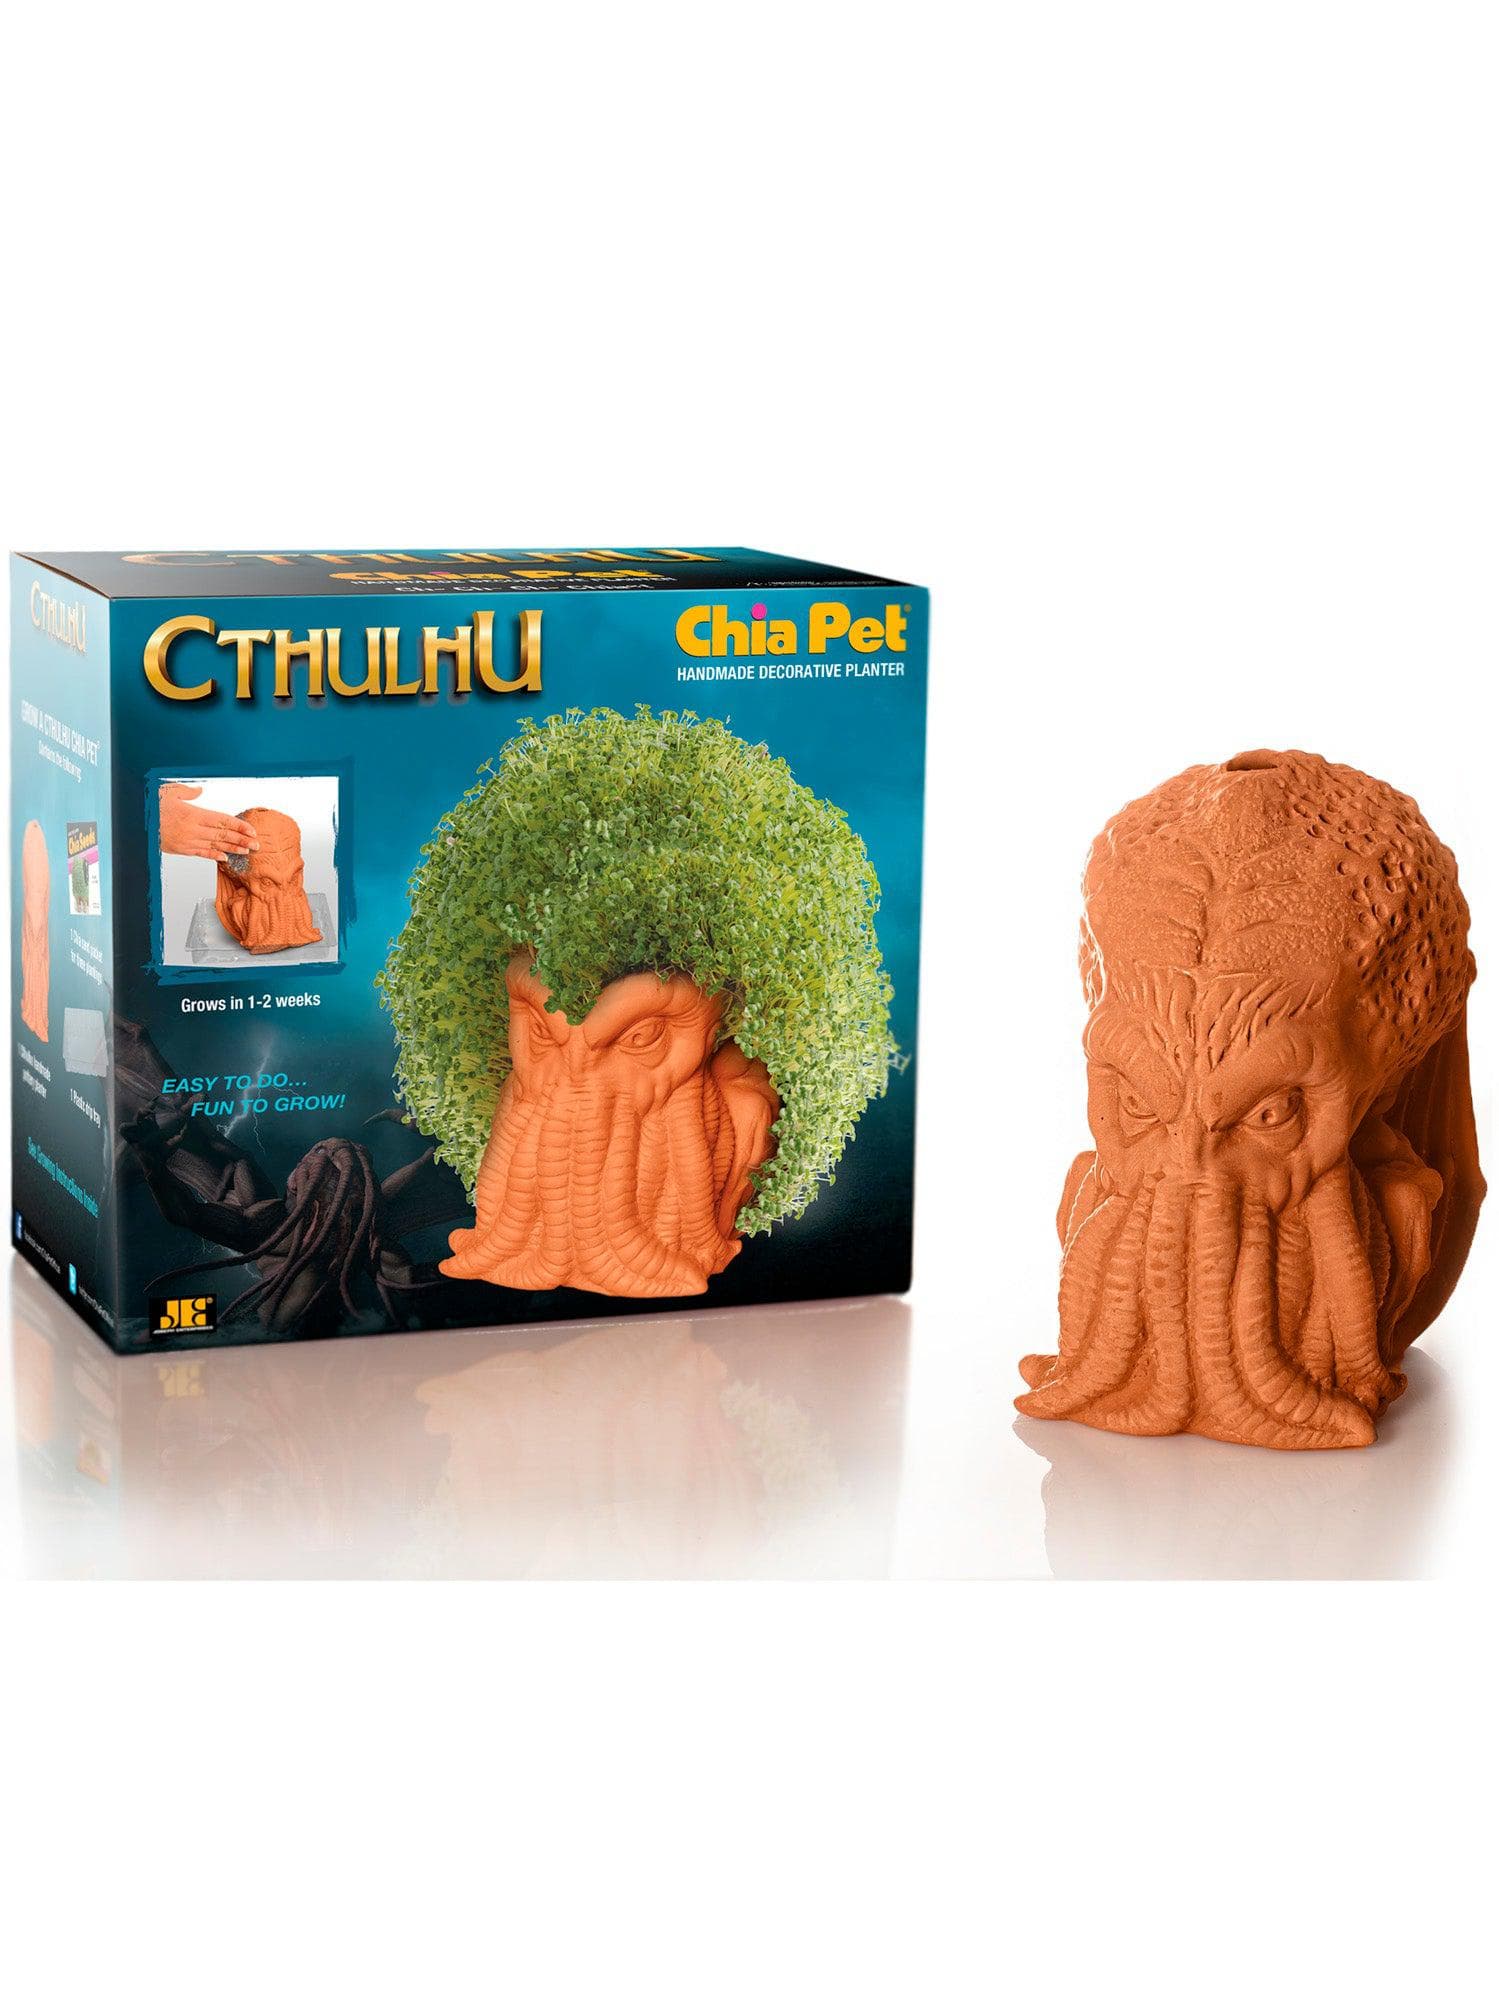 Chia Pet - Cthulhu - Decorative Planter - costumes.com